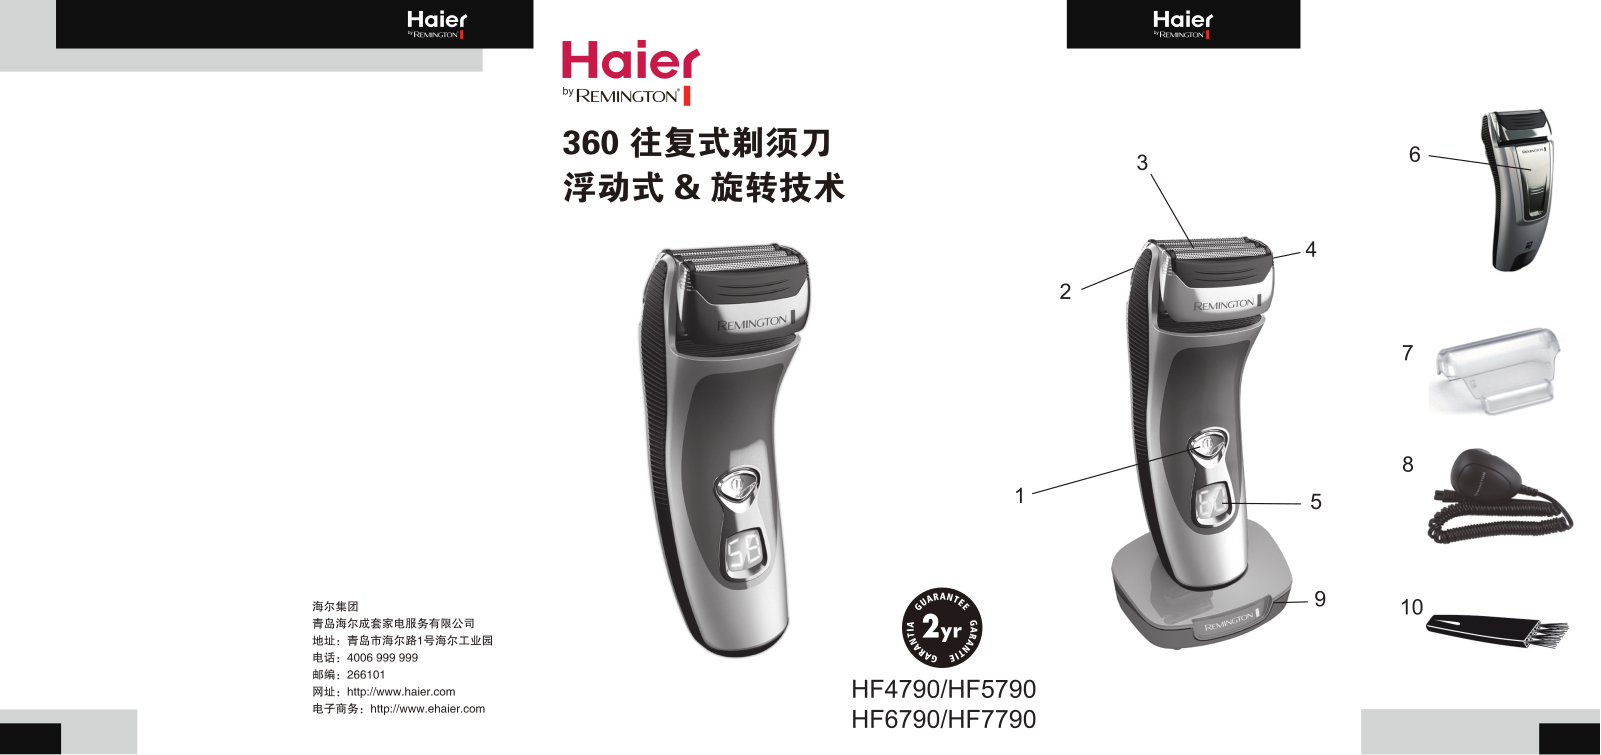 Haier HF4790, HF5790, HF6790, HF7790 User Manual